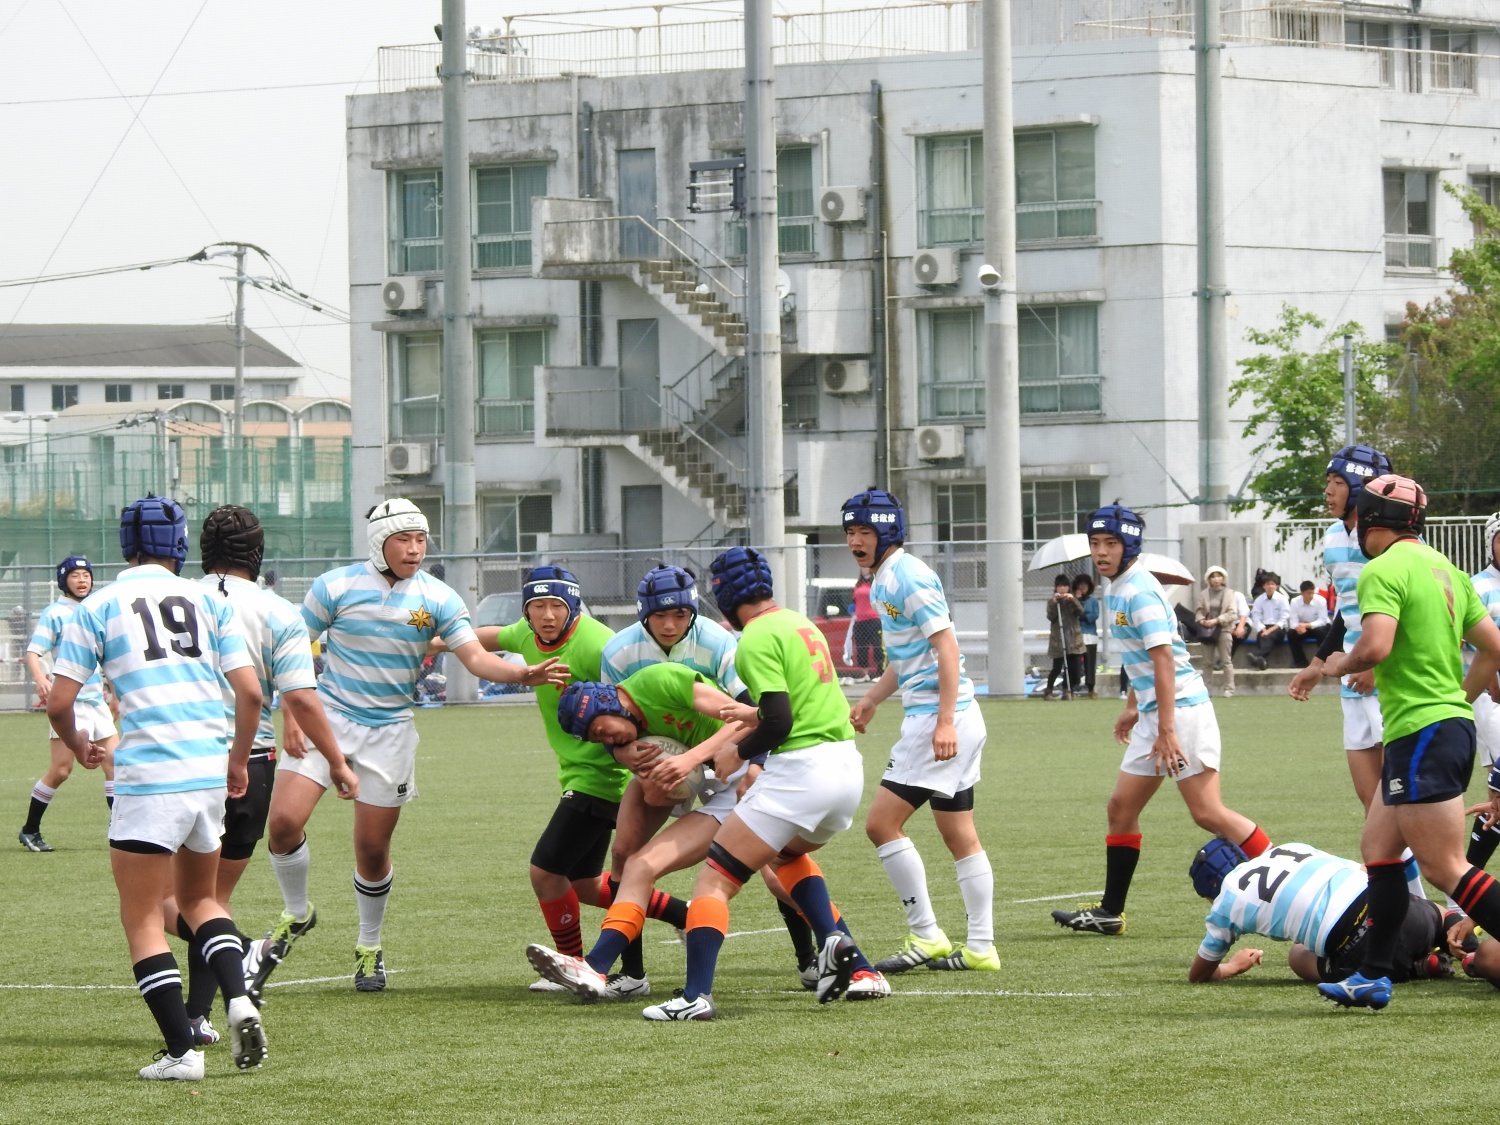 http://kokura-rugby.sakura.ne.jp/e0030_xlarge.jpg